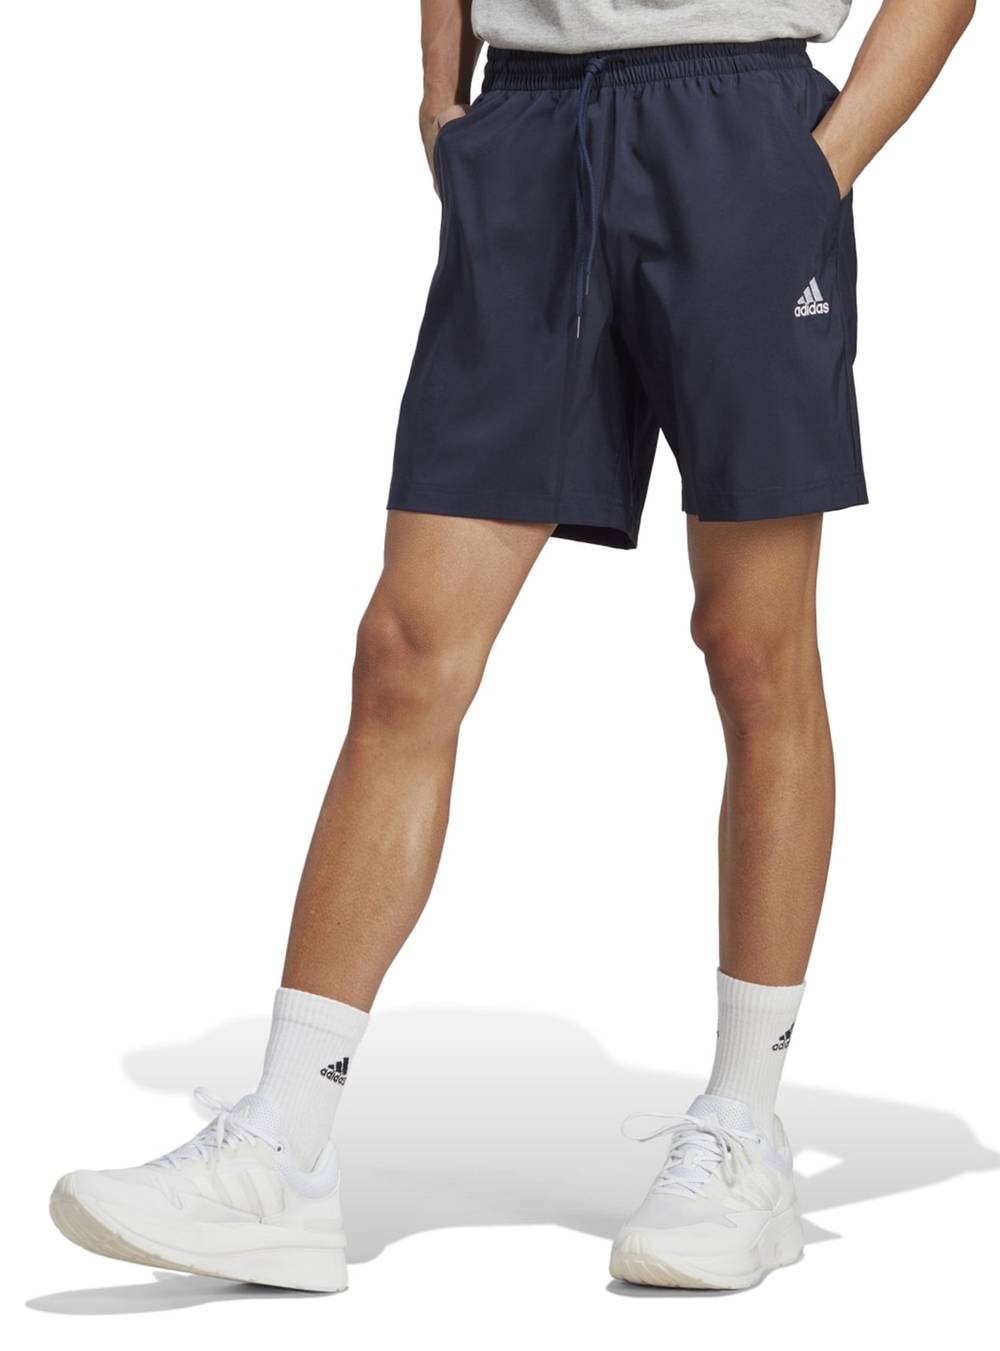 Adidas short estilo versátil (color: azul marino. talla: s)